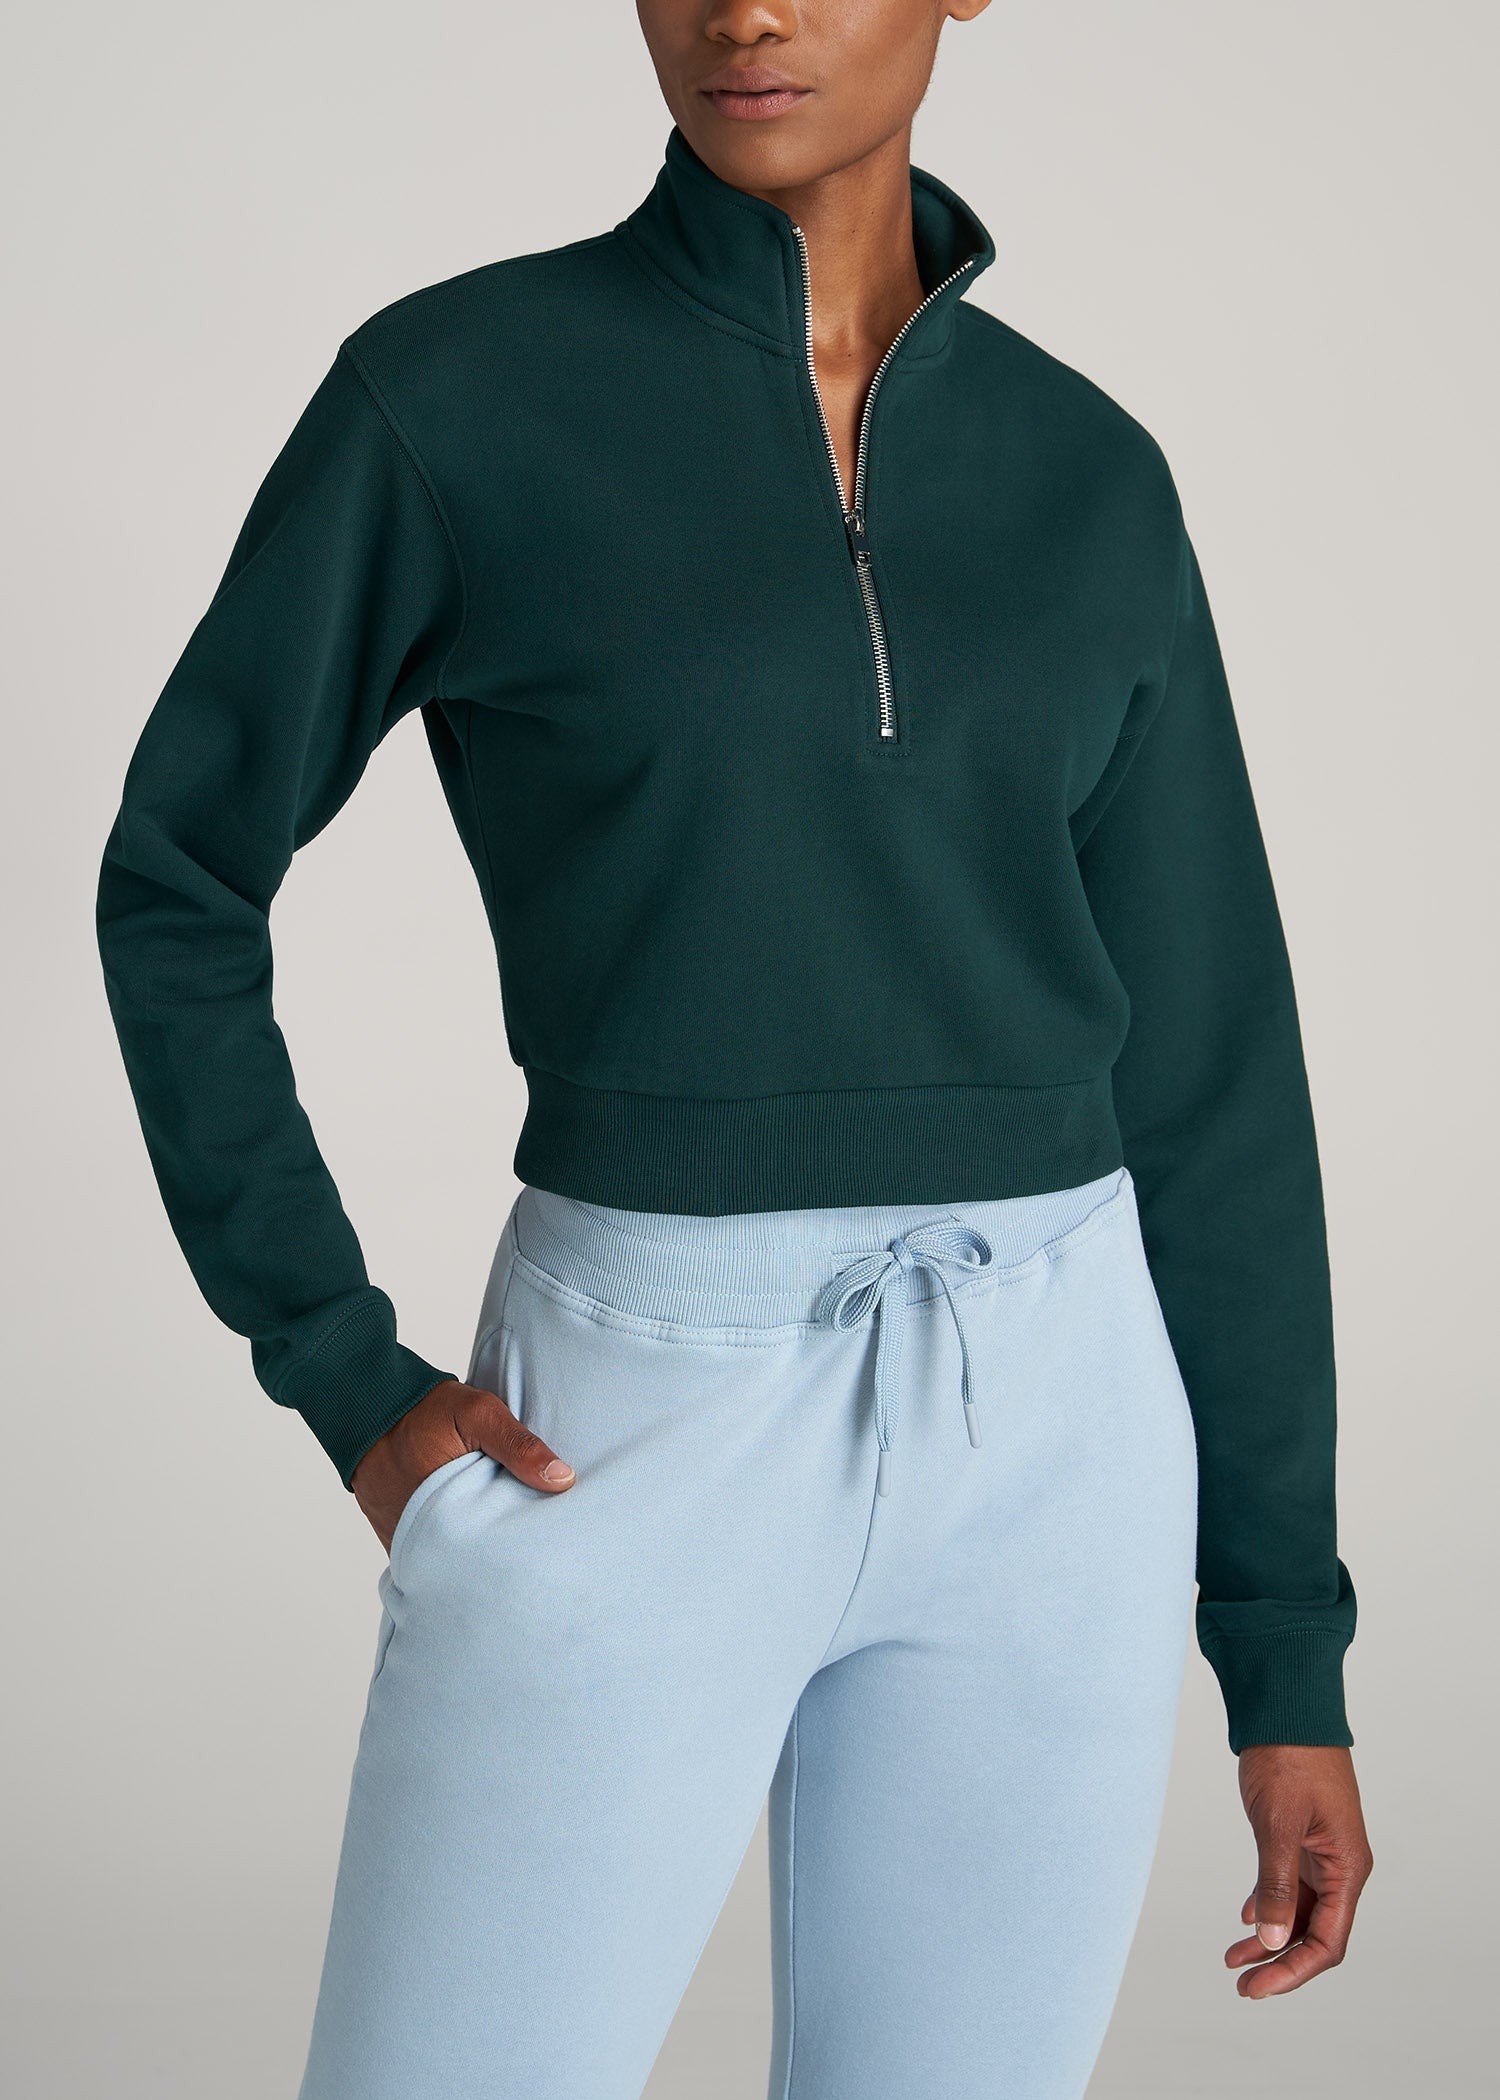 Love & Sports Women's Fleece Cropped Quarter Zip Pullover